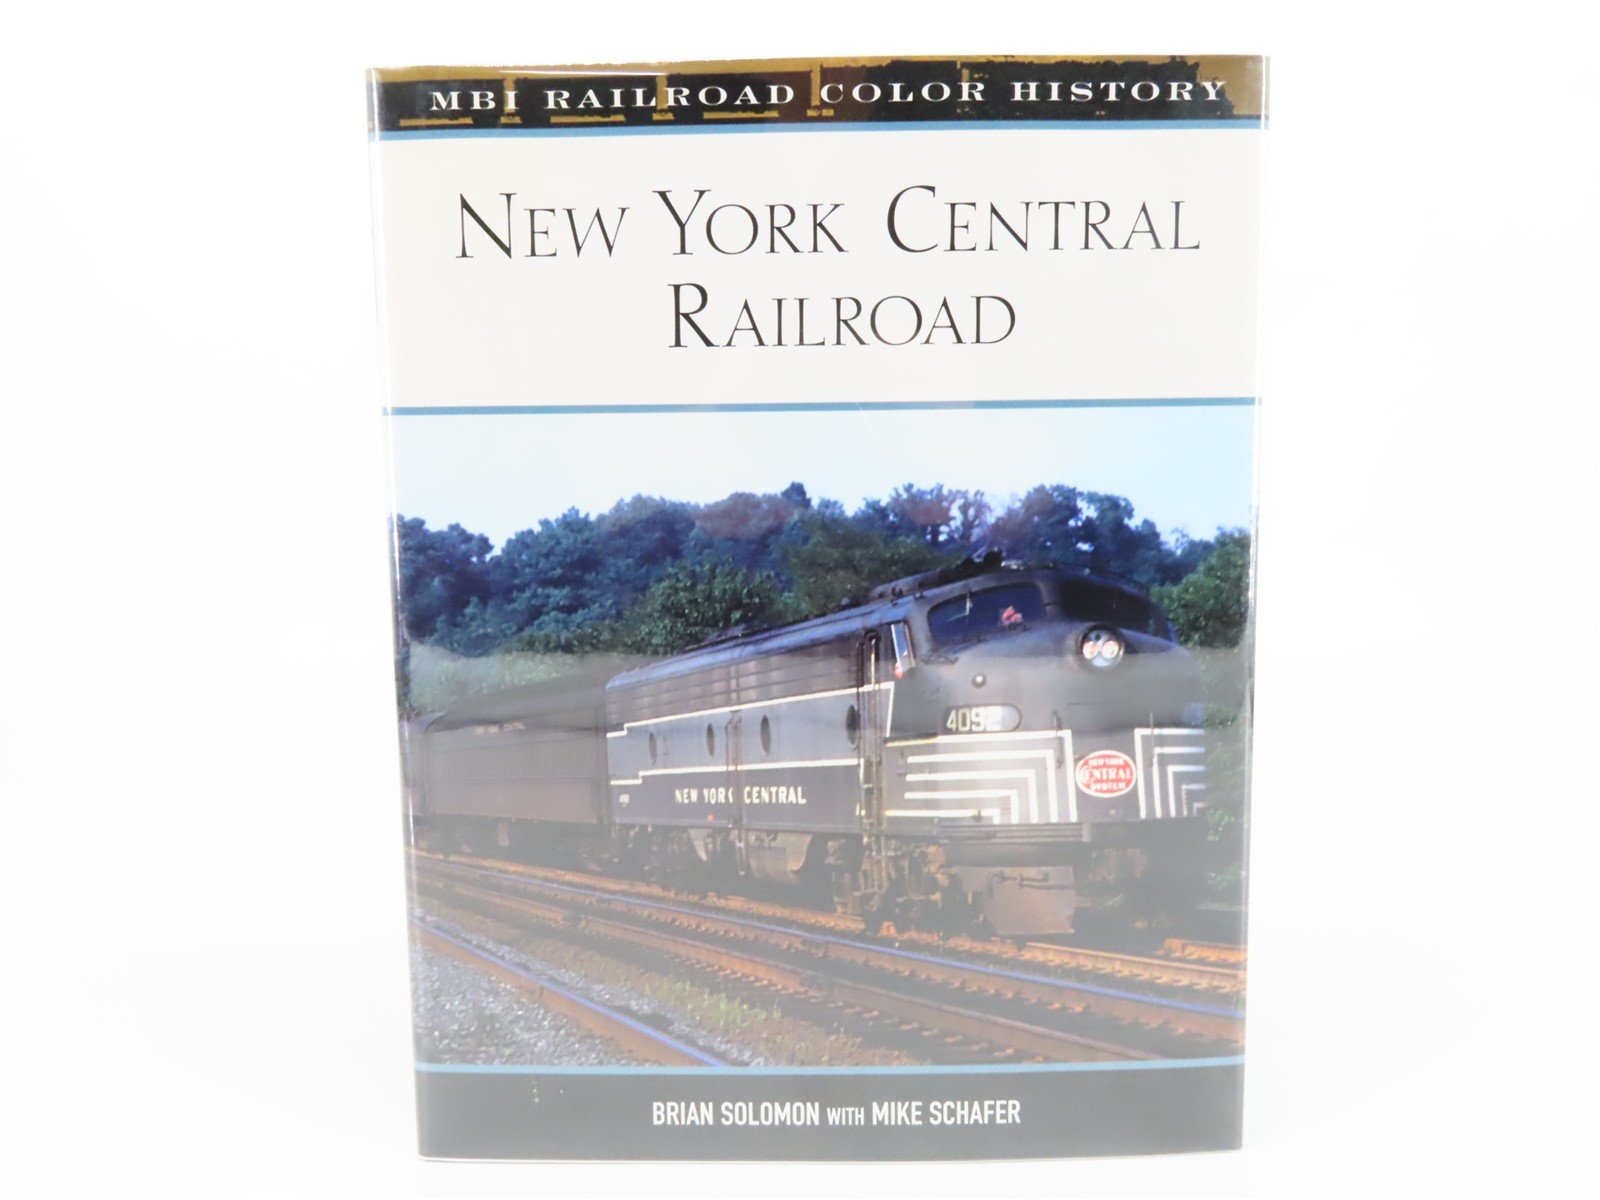 MBI Railroad Color History: New York Central Railroad by Solomon & Schafer ©2007